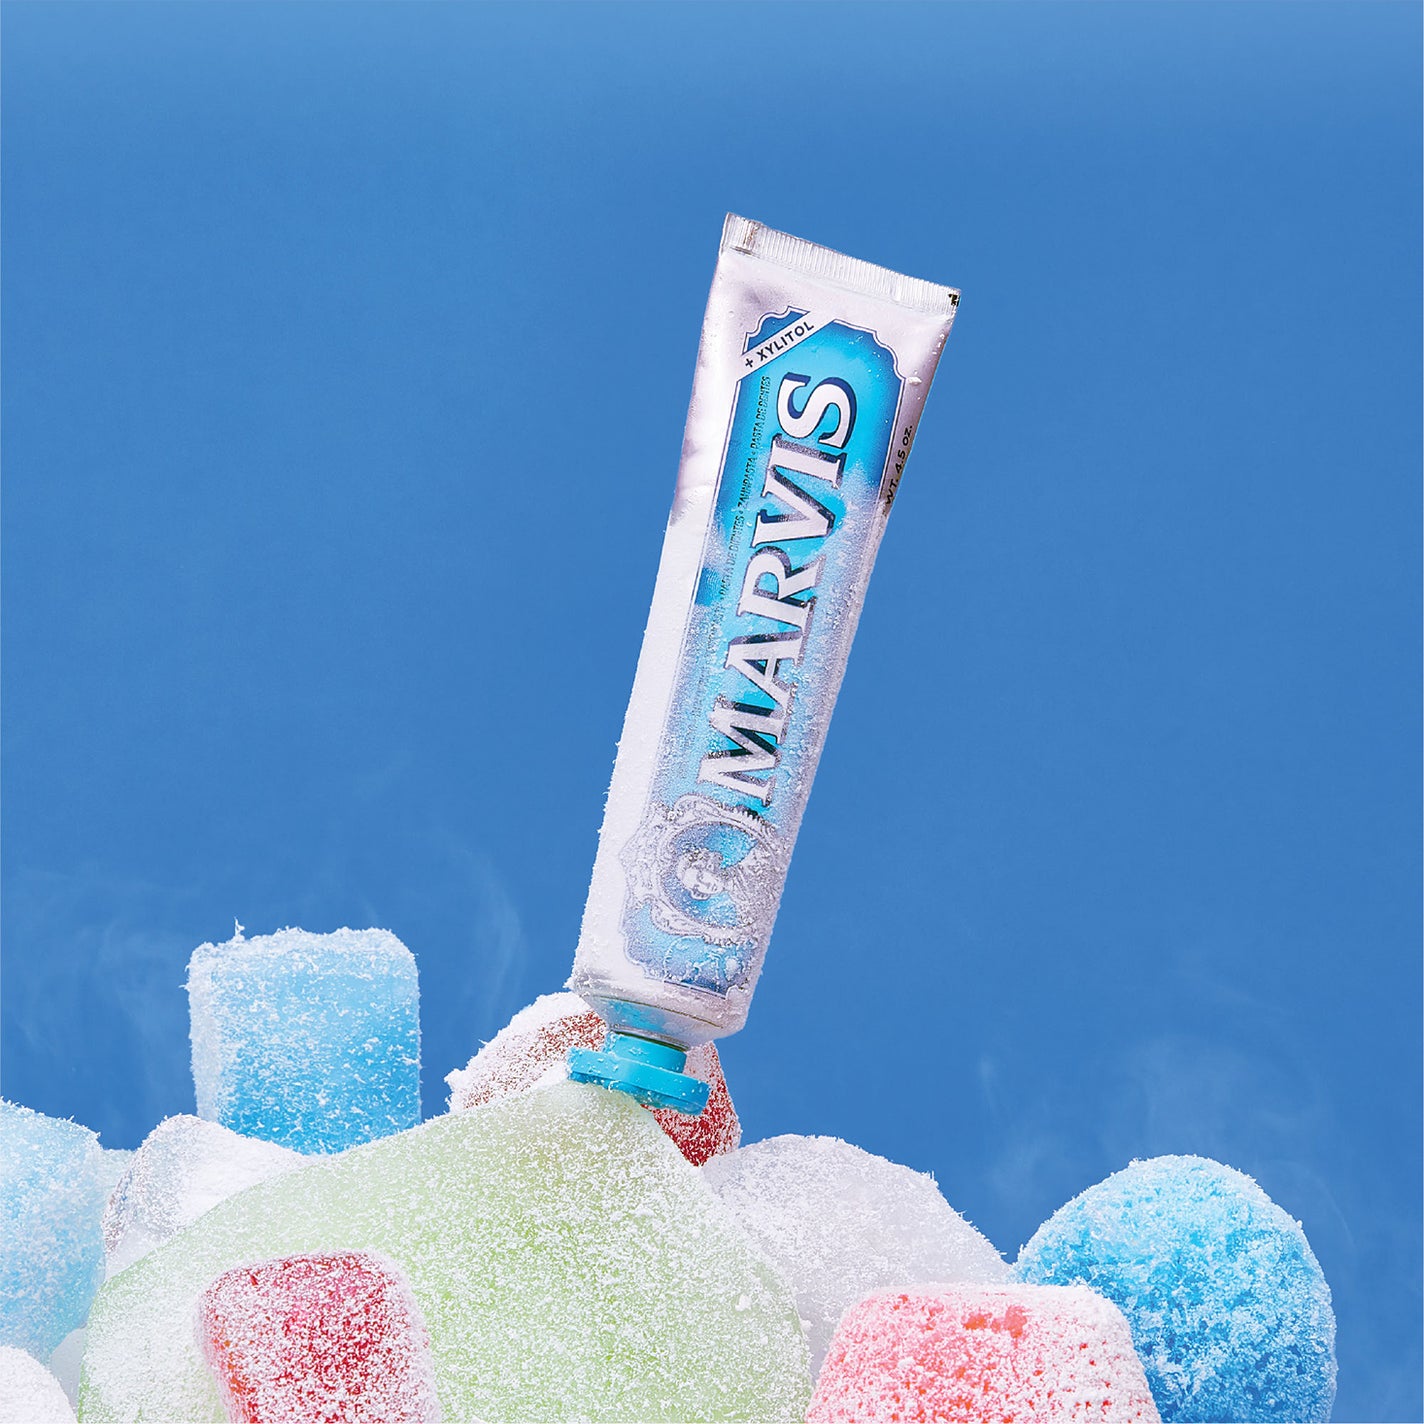 Marvis Aquatic Mint Toothpaste - 85ml